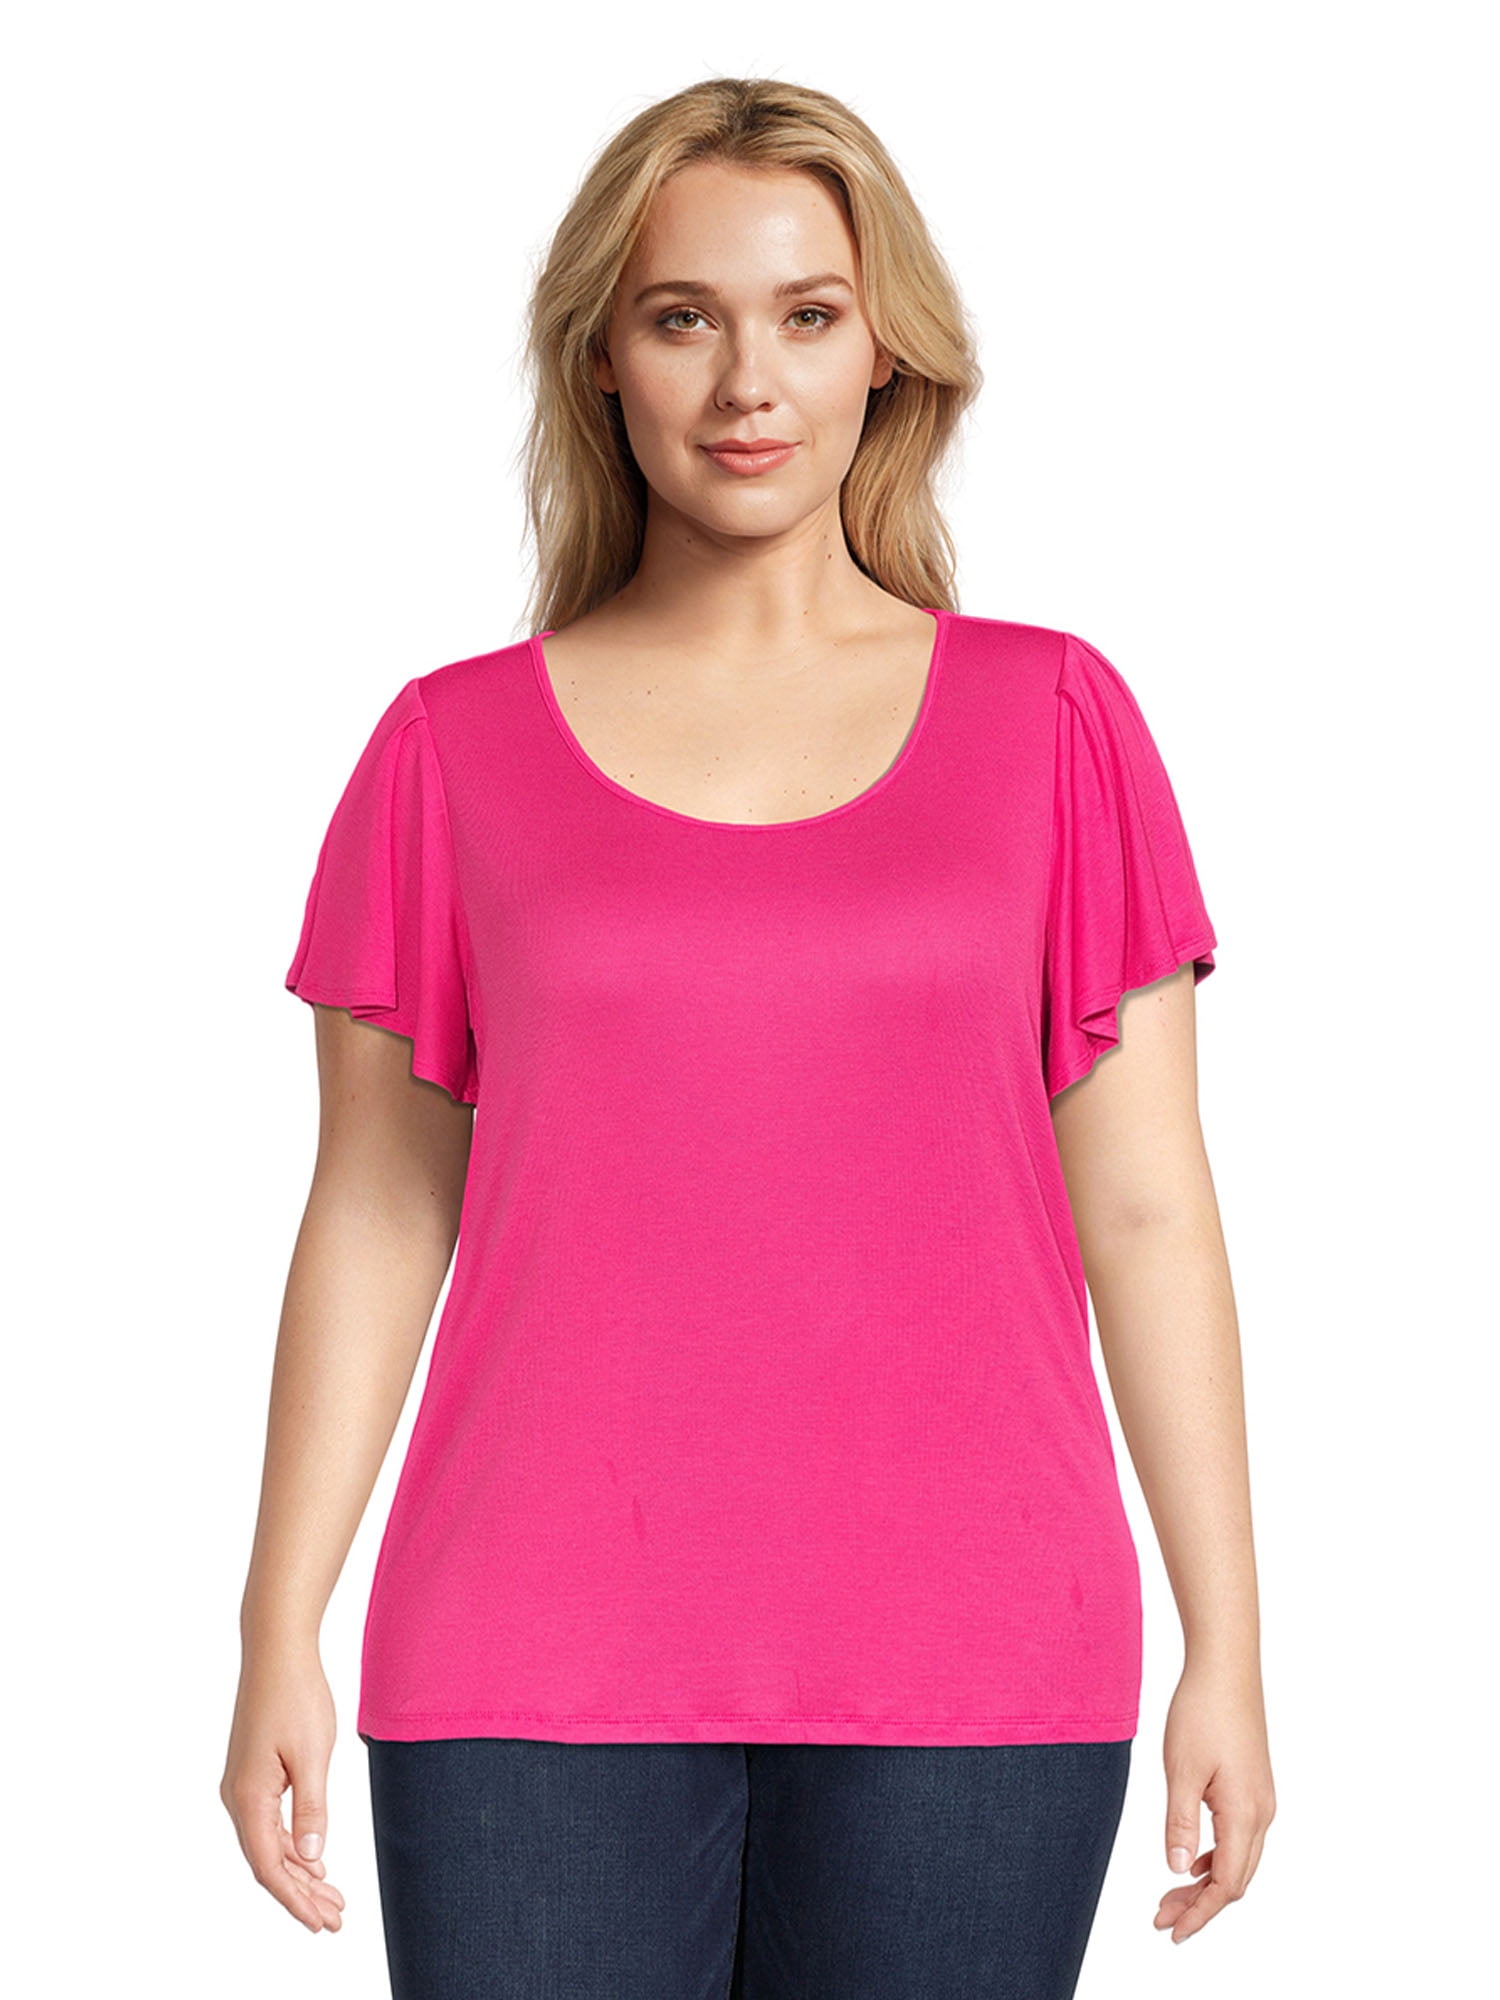 Terra & Sky Women's Plus Size Ruffle Sleeve Tee - Walmart.com